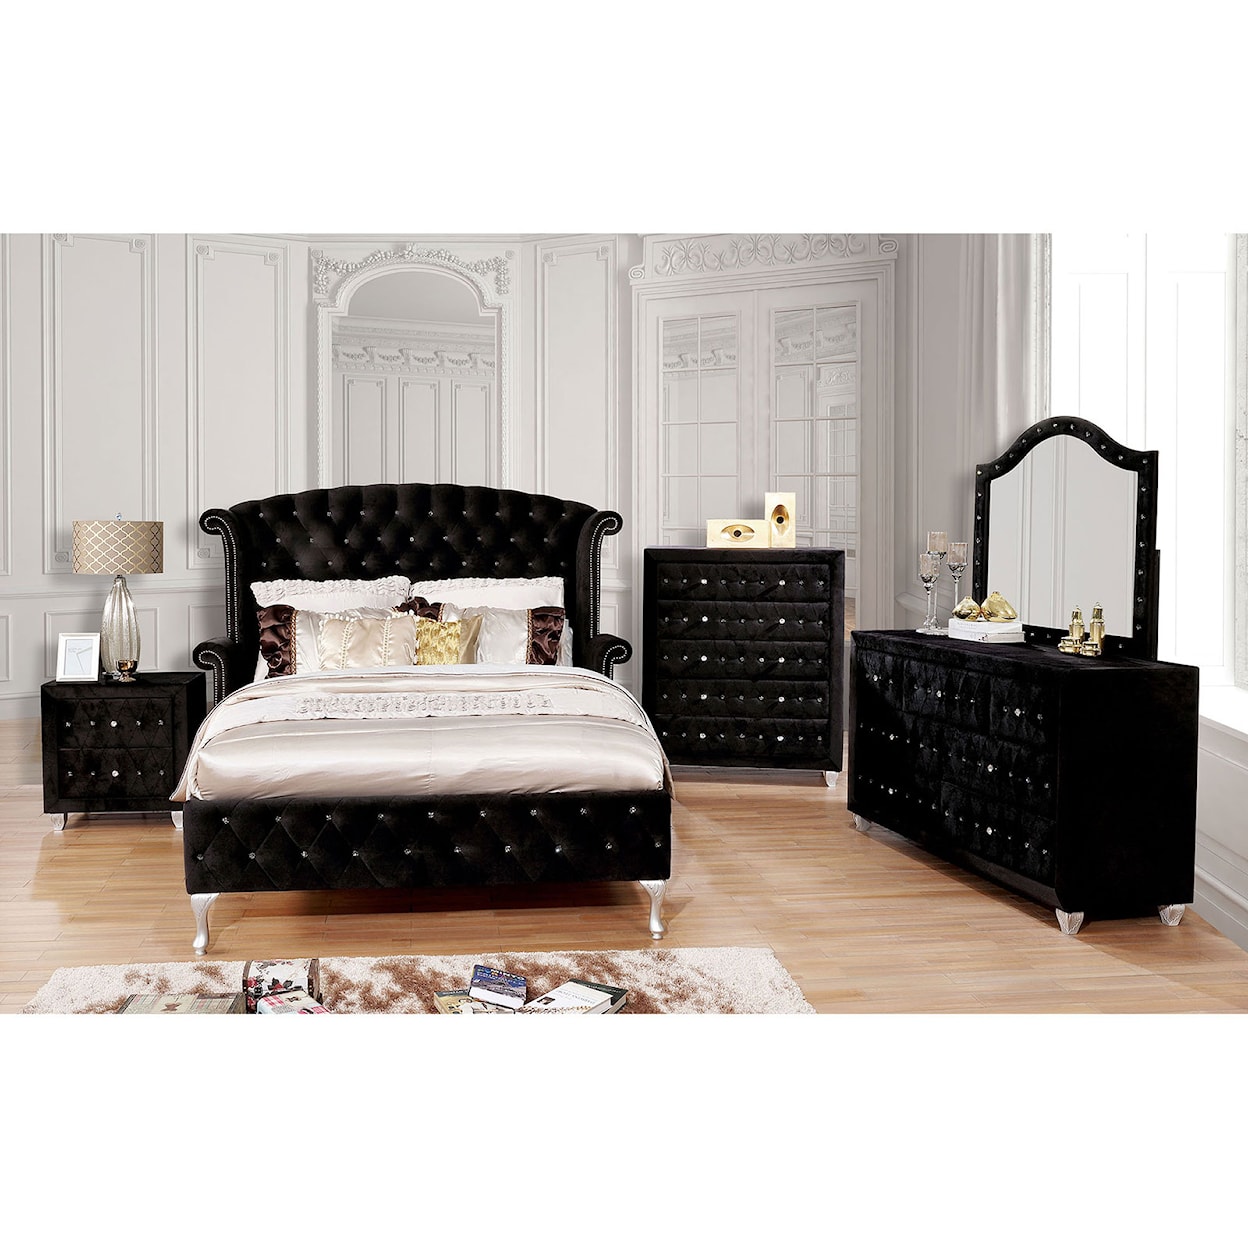 Furniture of America Alzire Queen Bedroom Group